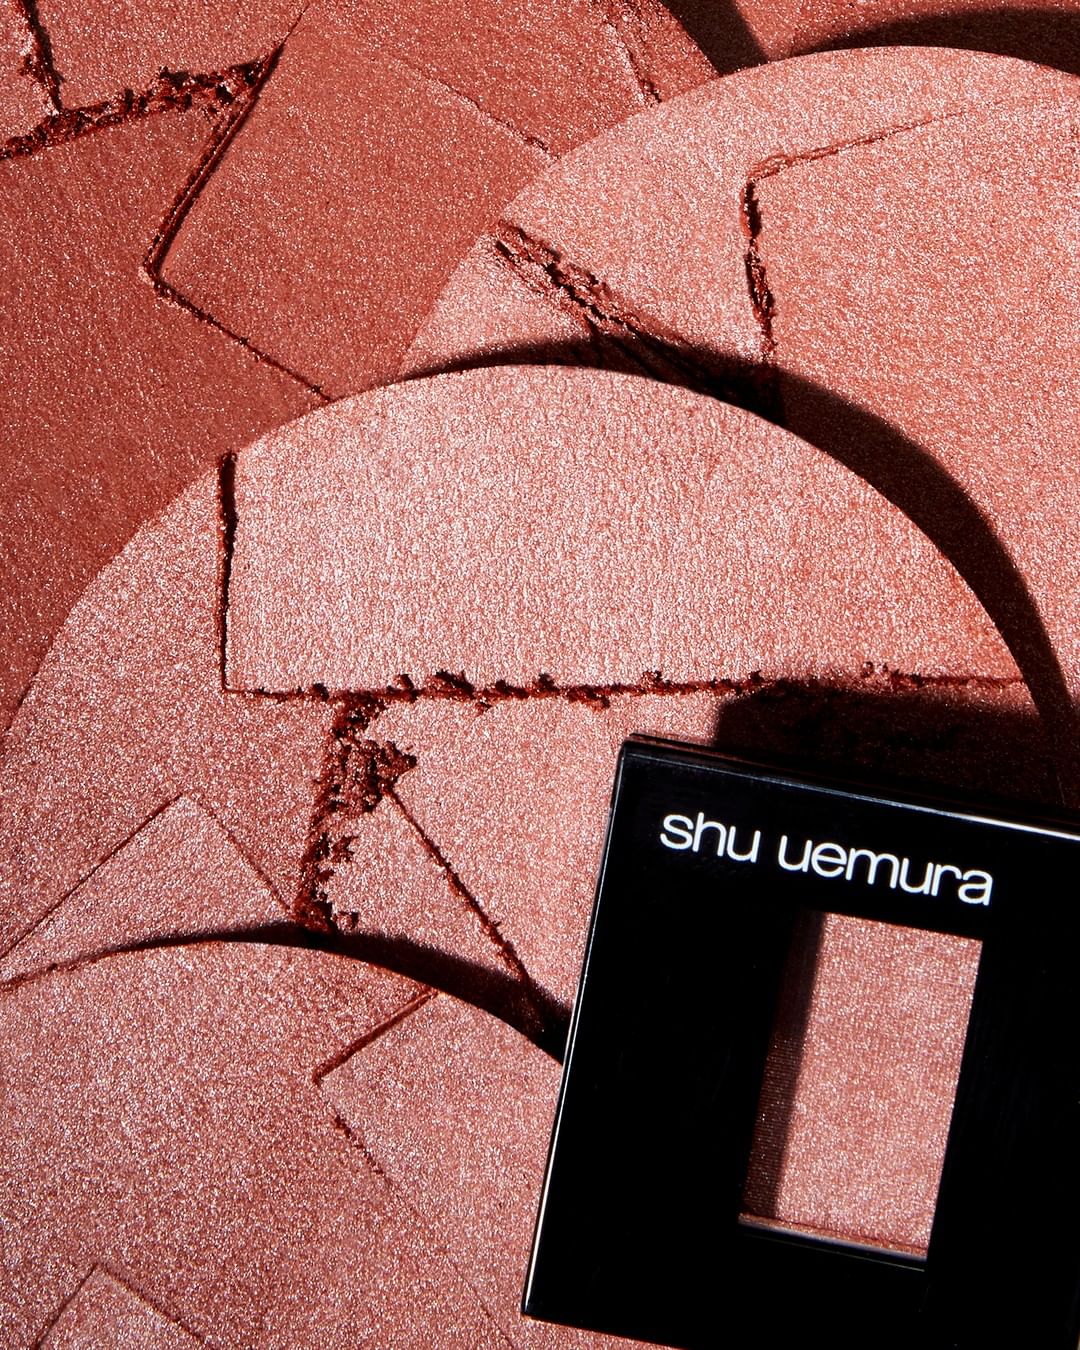 shu uemura - an edgy foil finish to make your eyes sparkle. #shuuemura #shuartistry